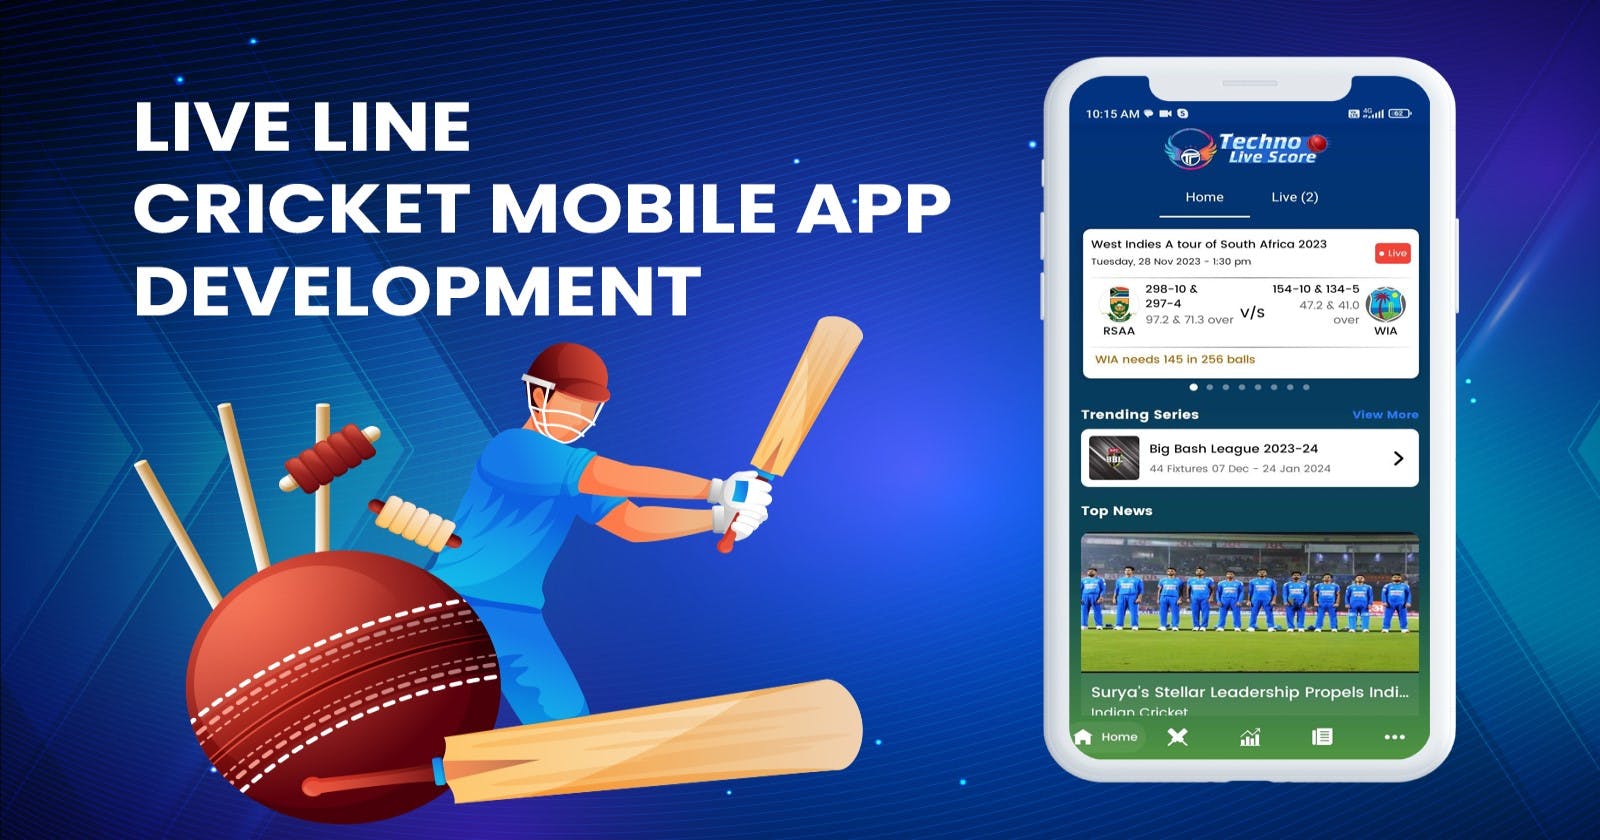 Cricket Live Line App Development With Score Feature